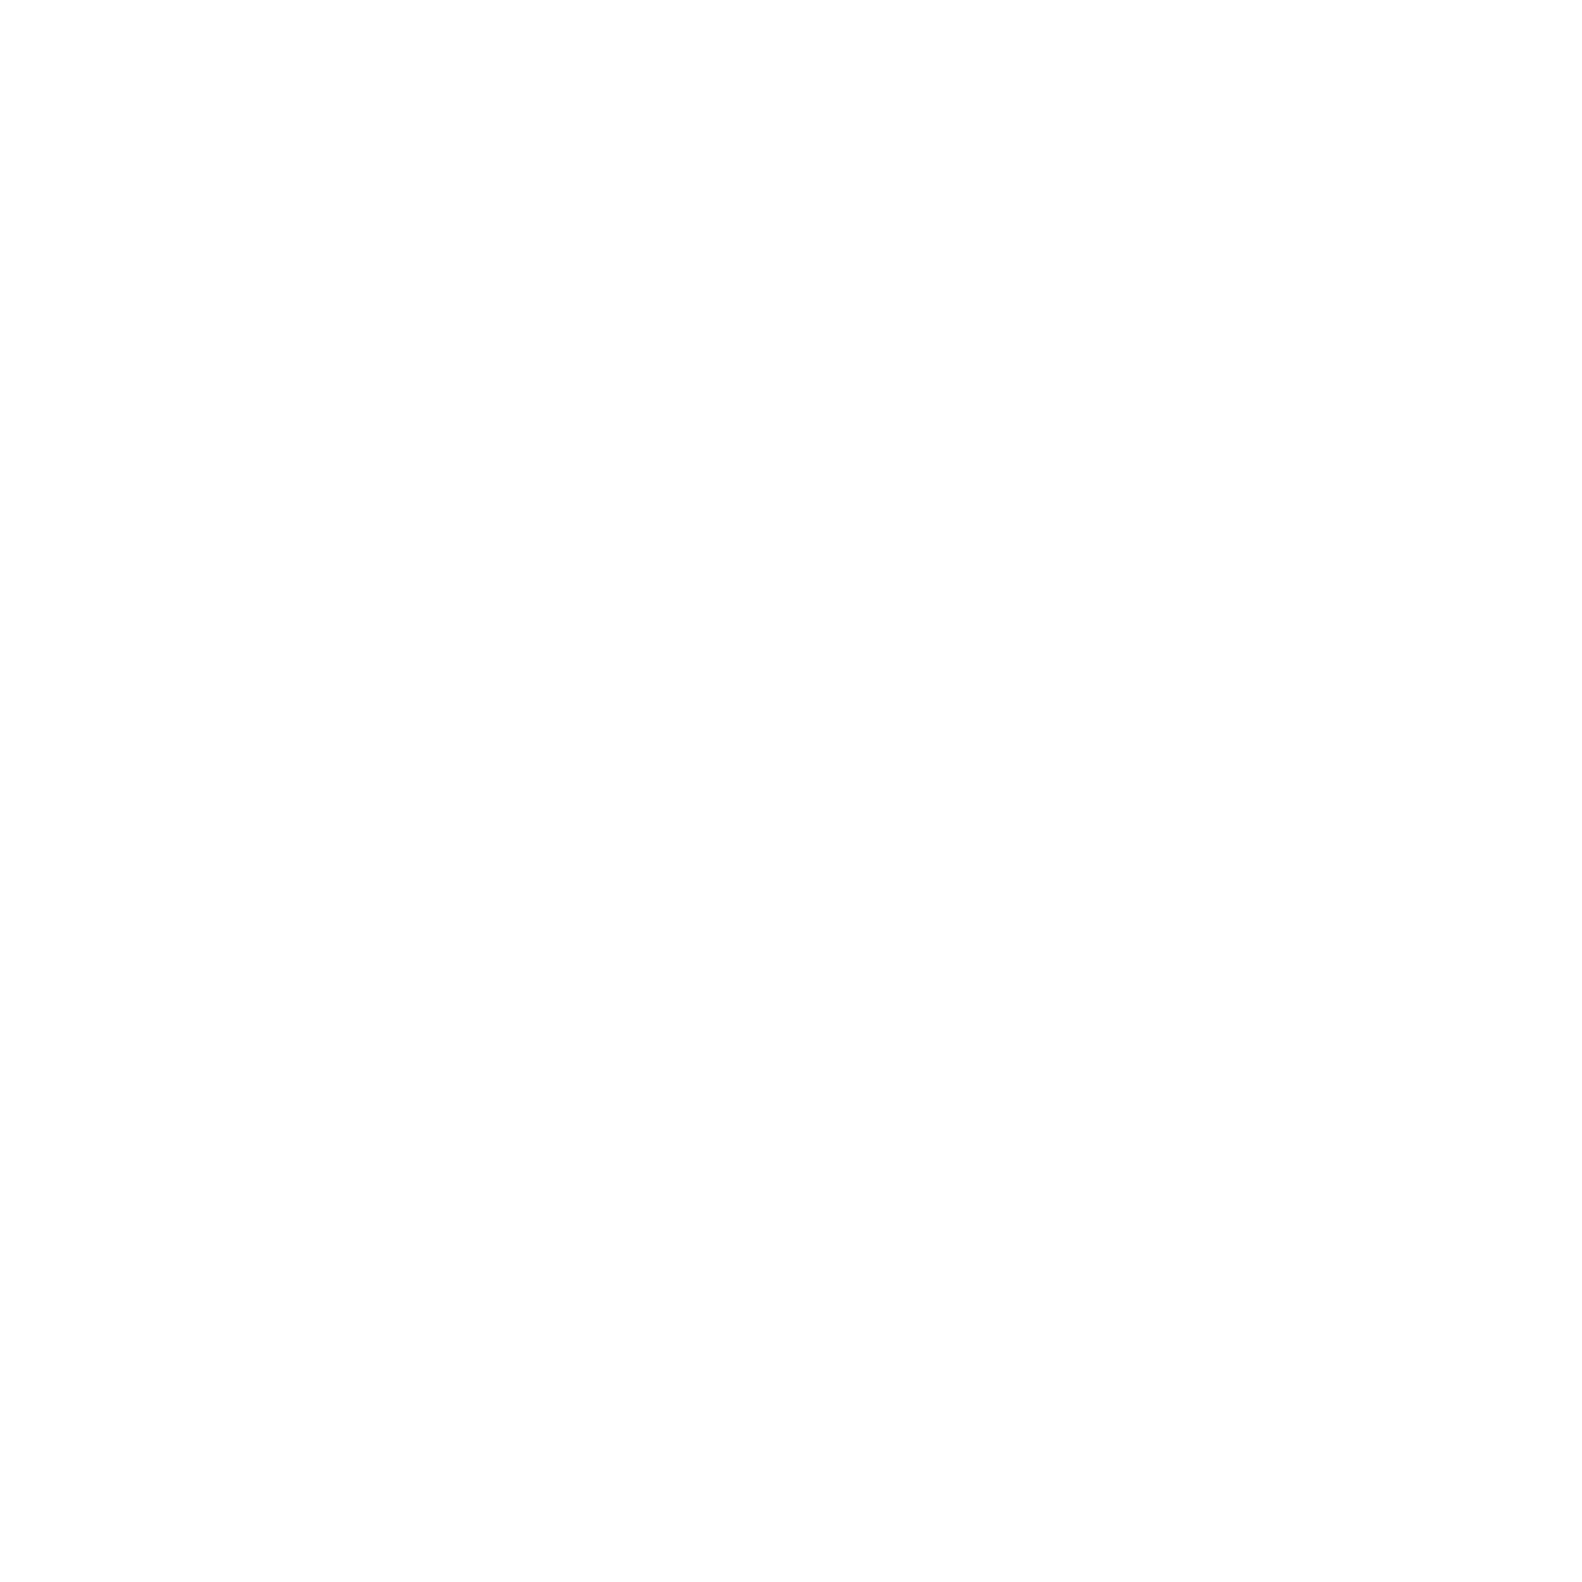 Stars illustration